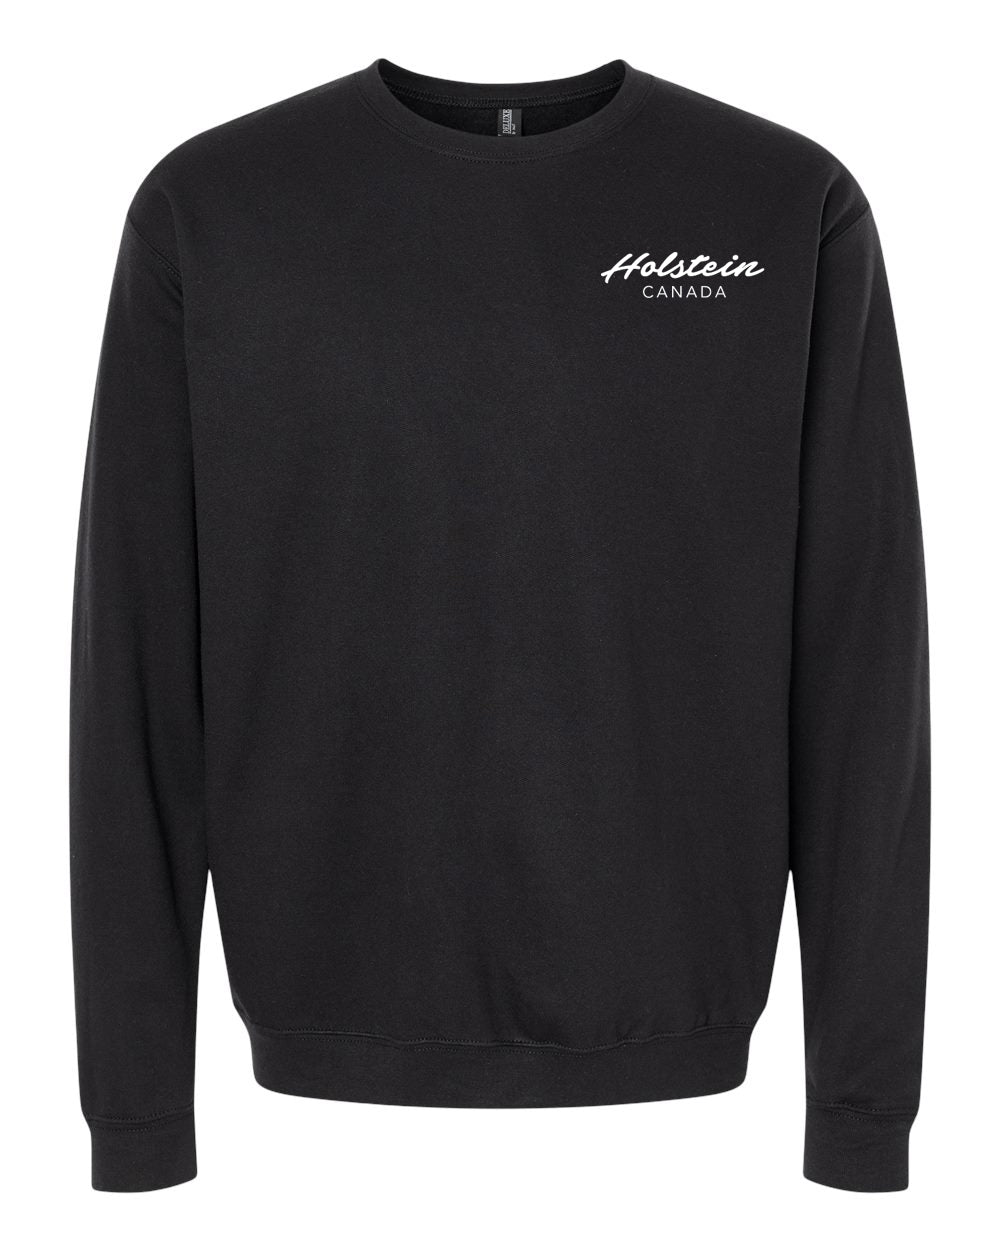 Adult Crewneck Sweatshirt  - NEW DESIGN